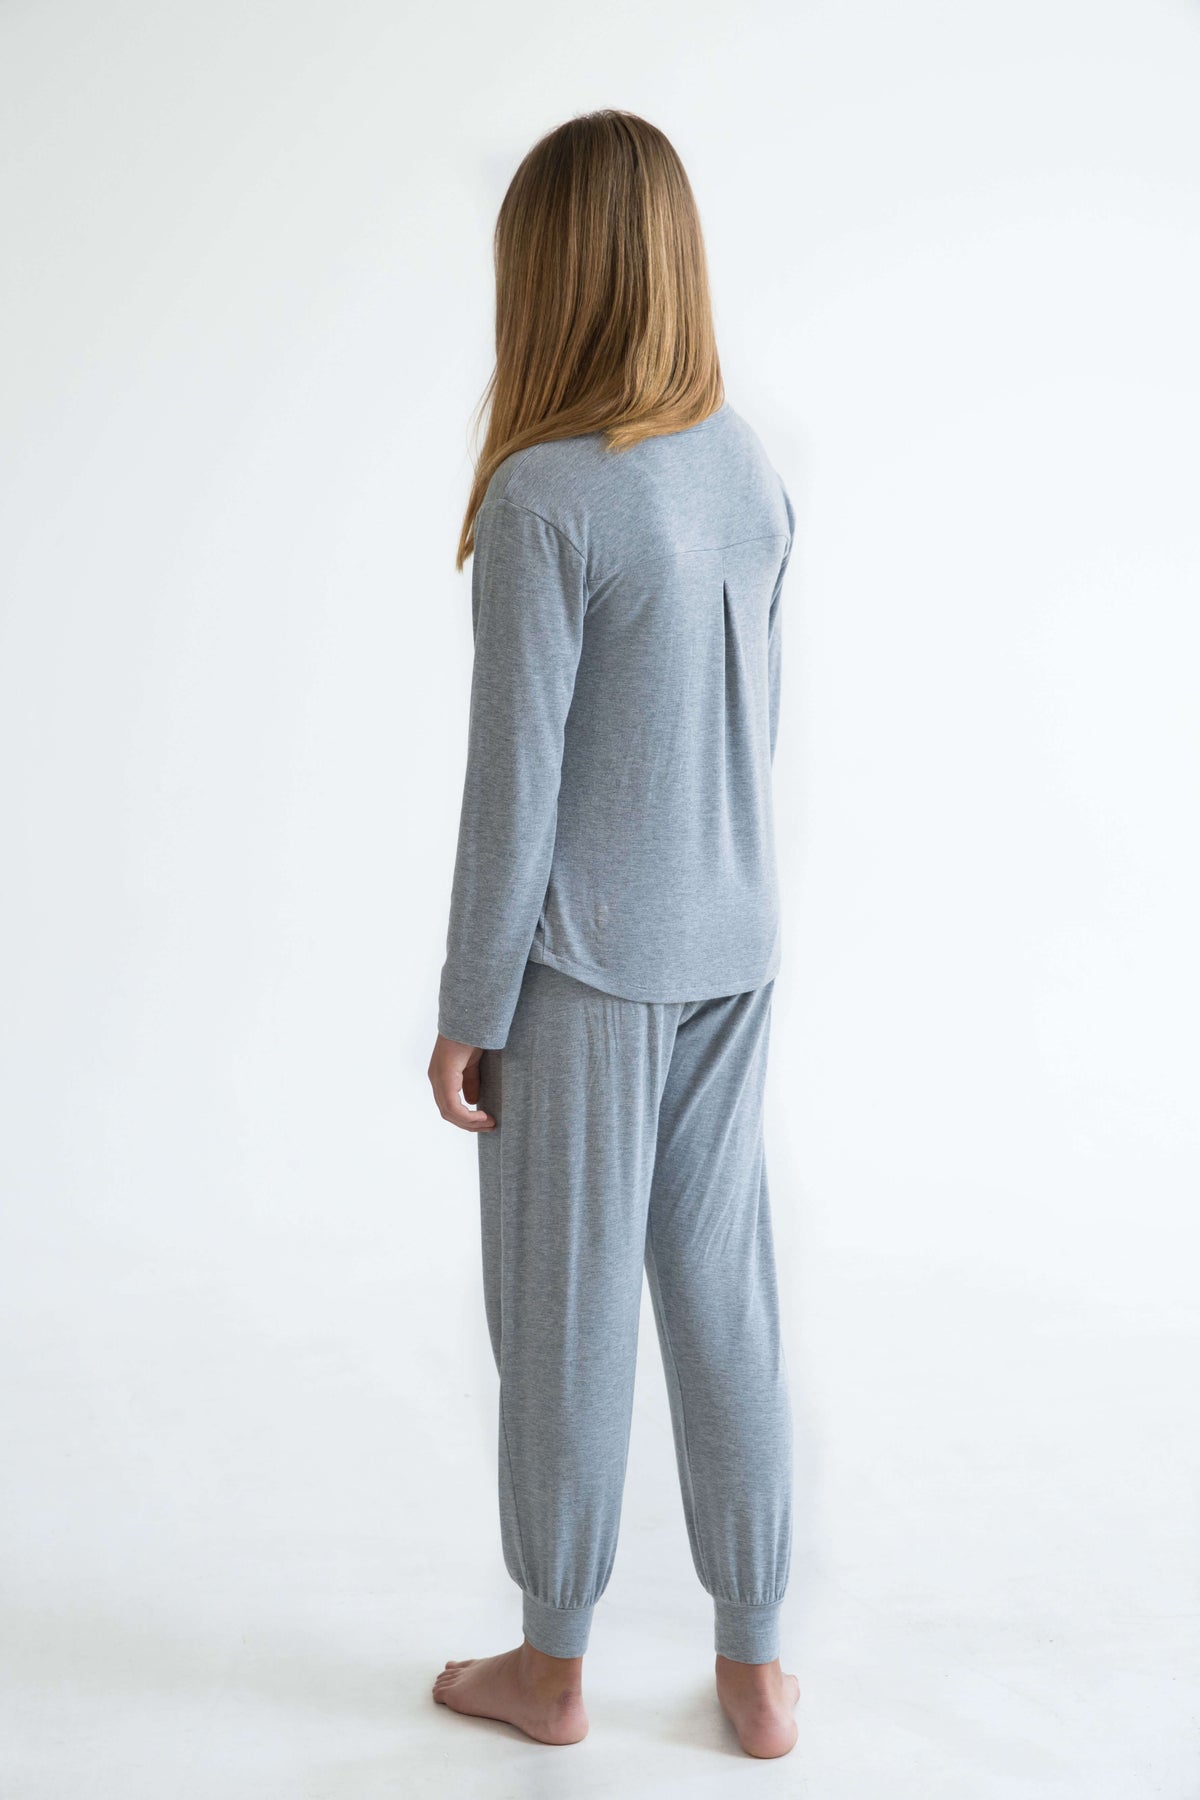 grey teen girls winter long sleeve bamboo pyjama top by Love Haidee Australia back